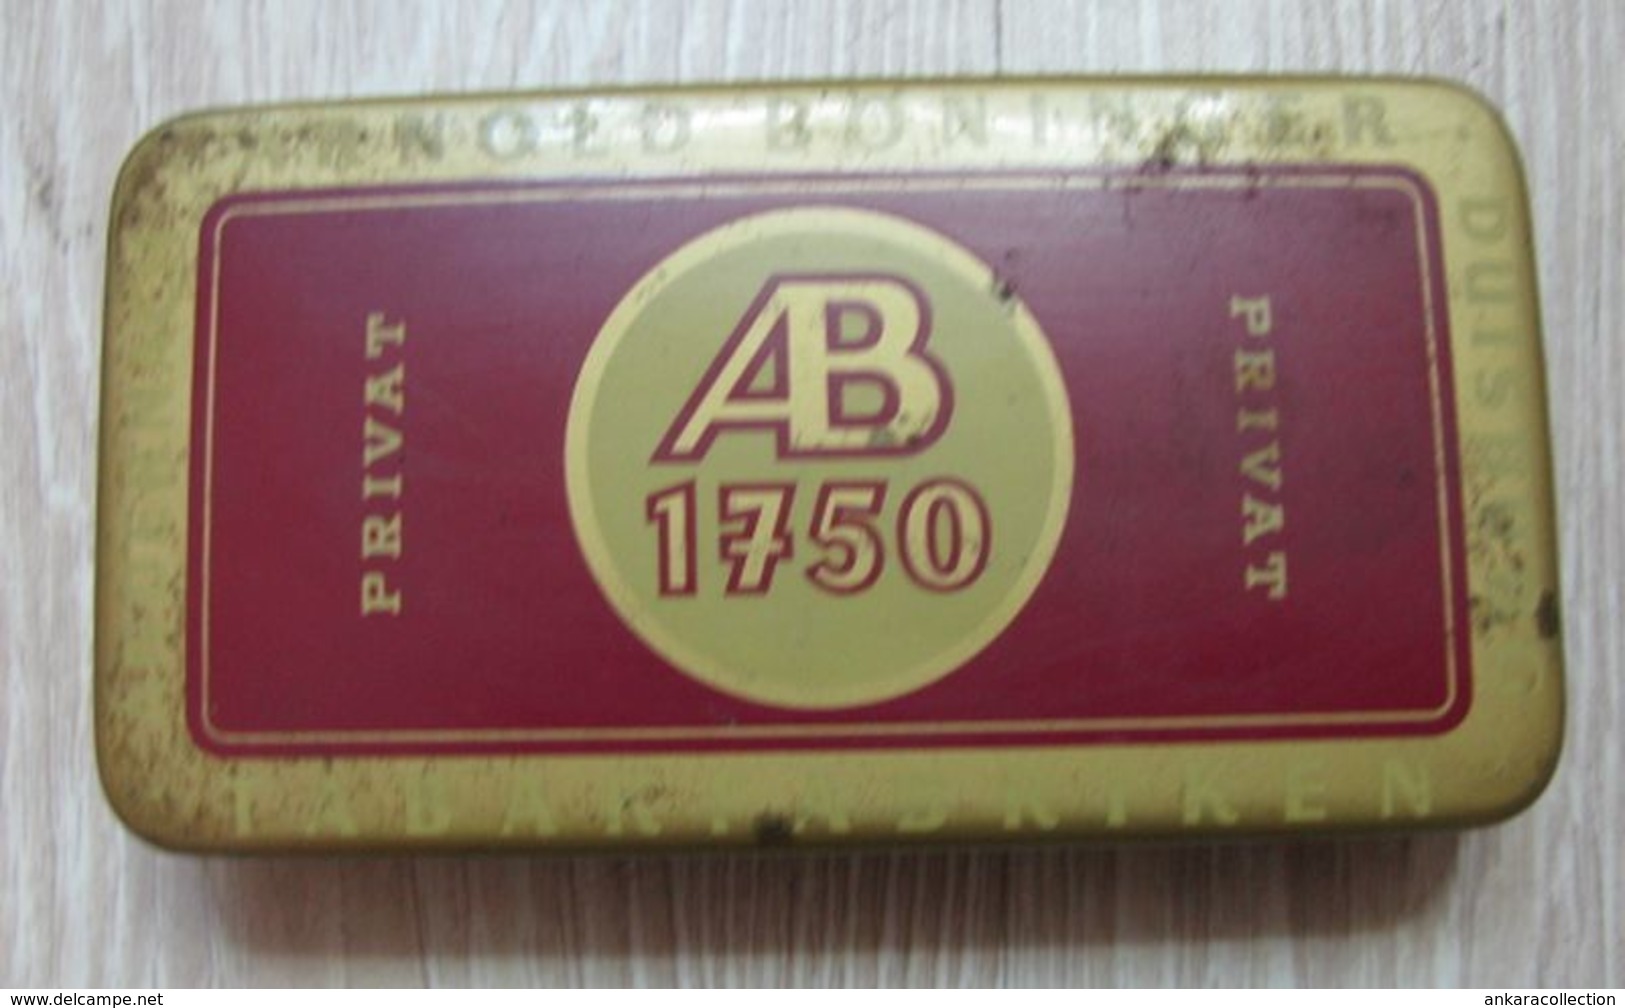 AC -  ANDERNACH ARNOLD BONINGER DUISBURG PRIVAT AB 1750 CIGARETTE TOBACCO EMPTY VINTAGE TIN BOX - Empty Tobacco Boxes